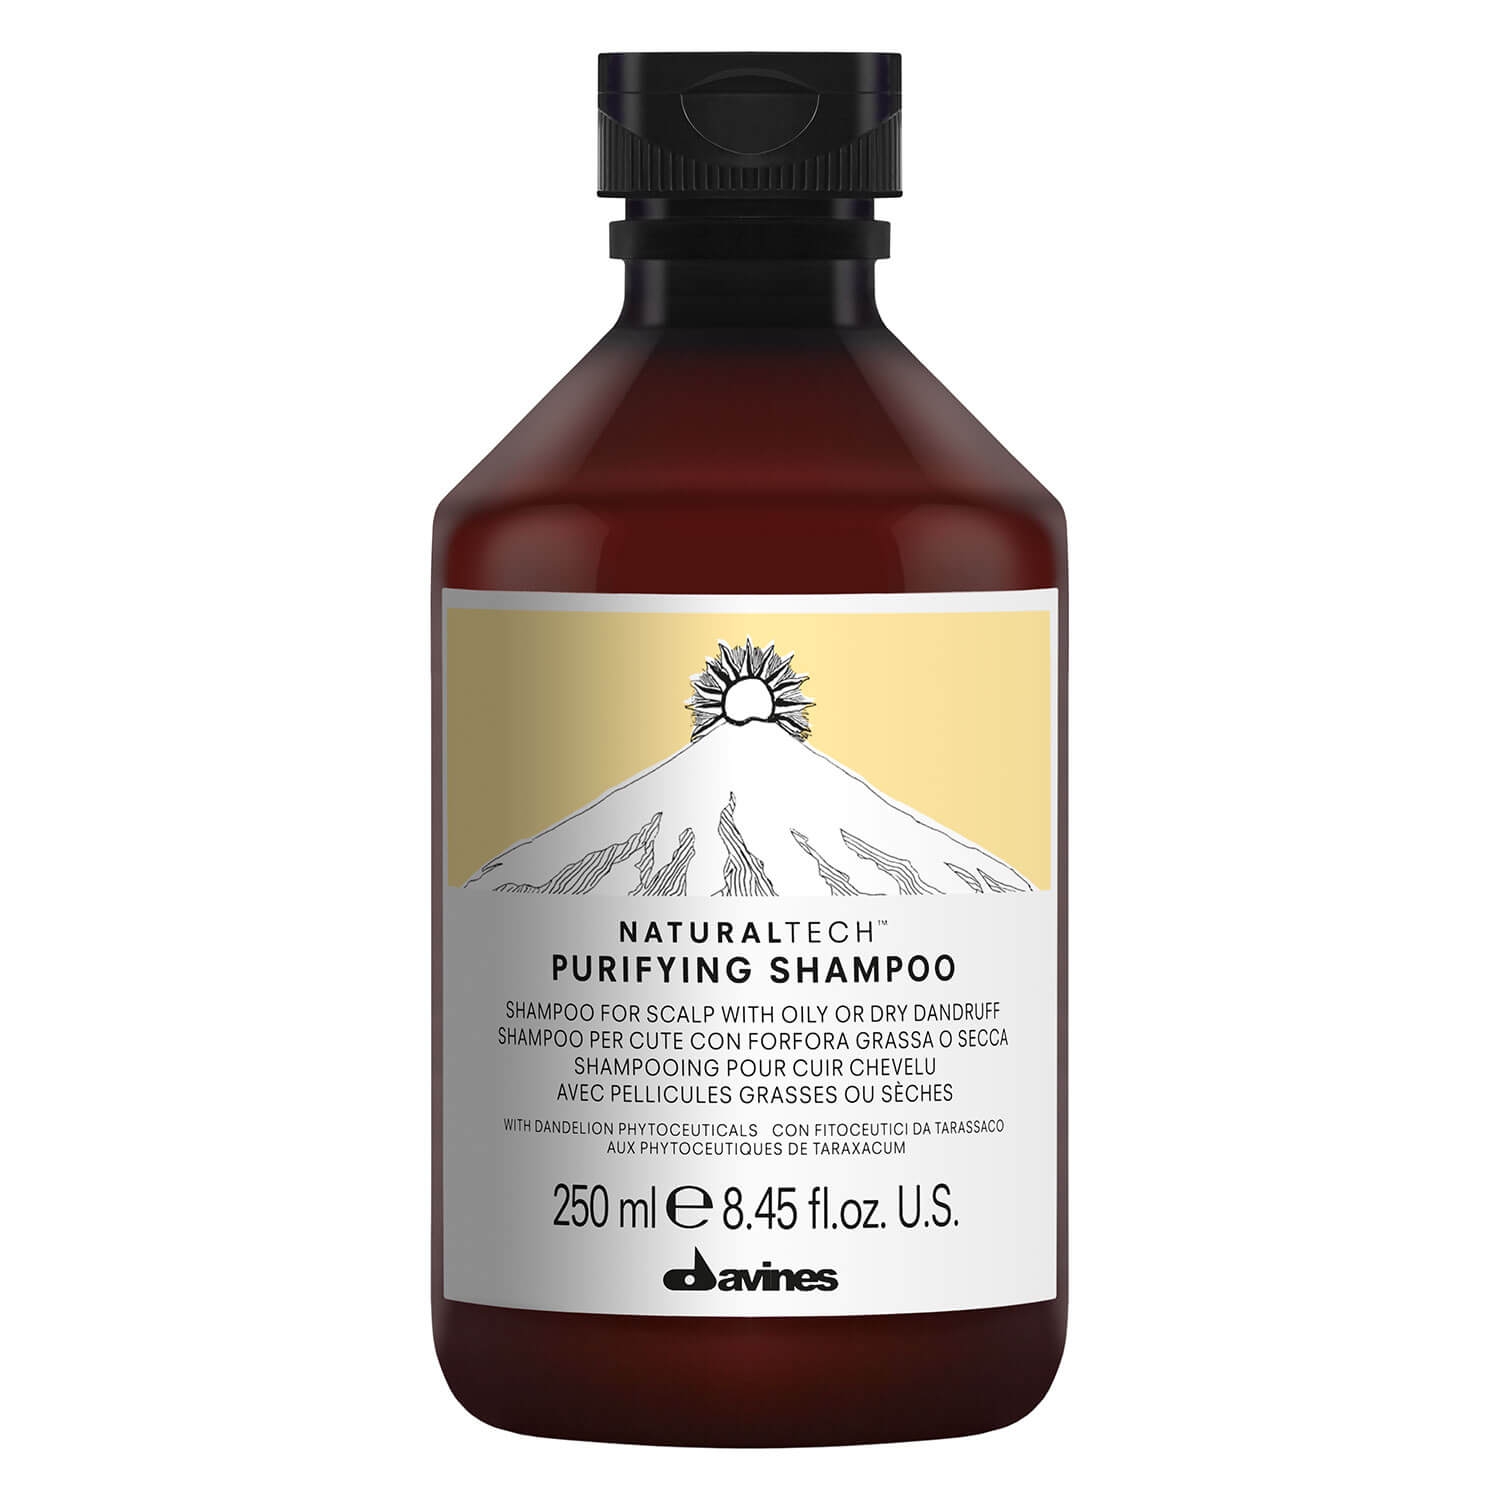 Produktbild von Naturaltech - Purifying Shampoo